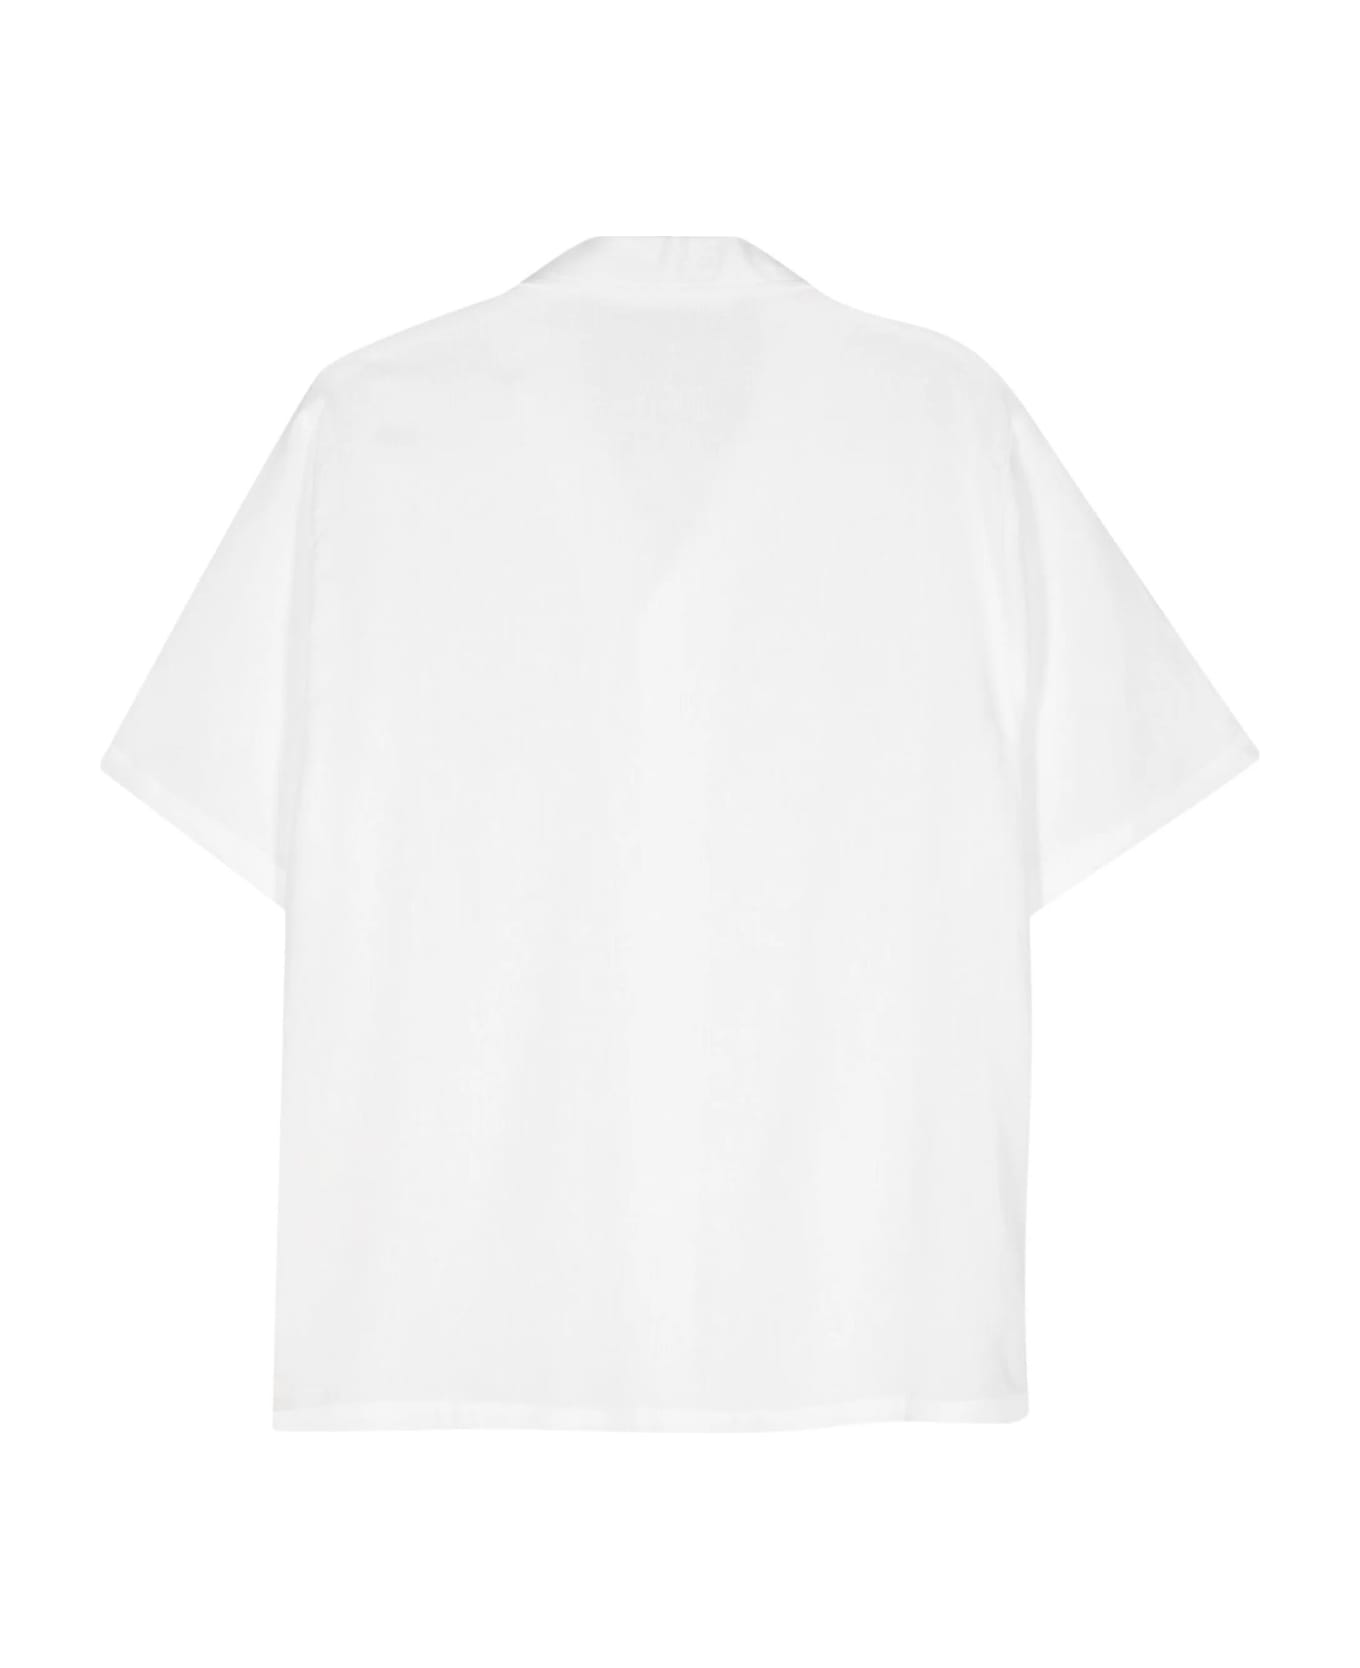 Séfr Sefr Shirts White - White